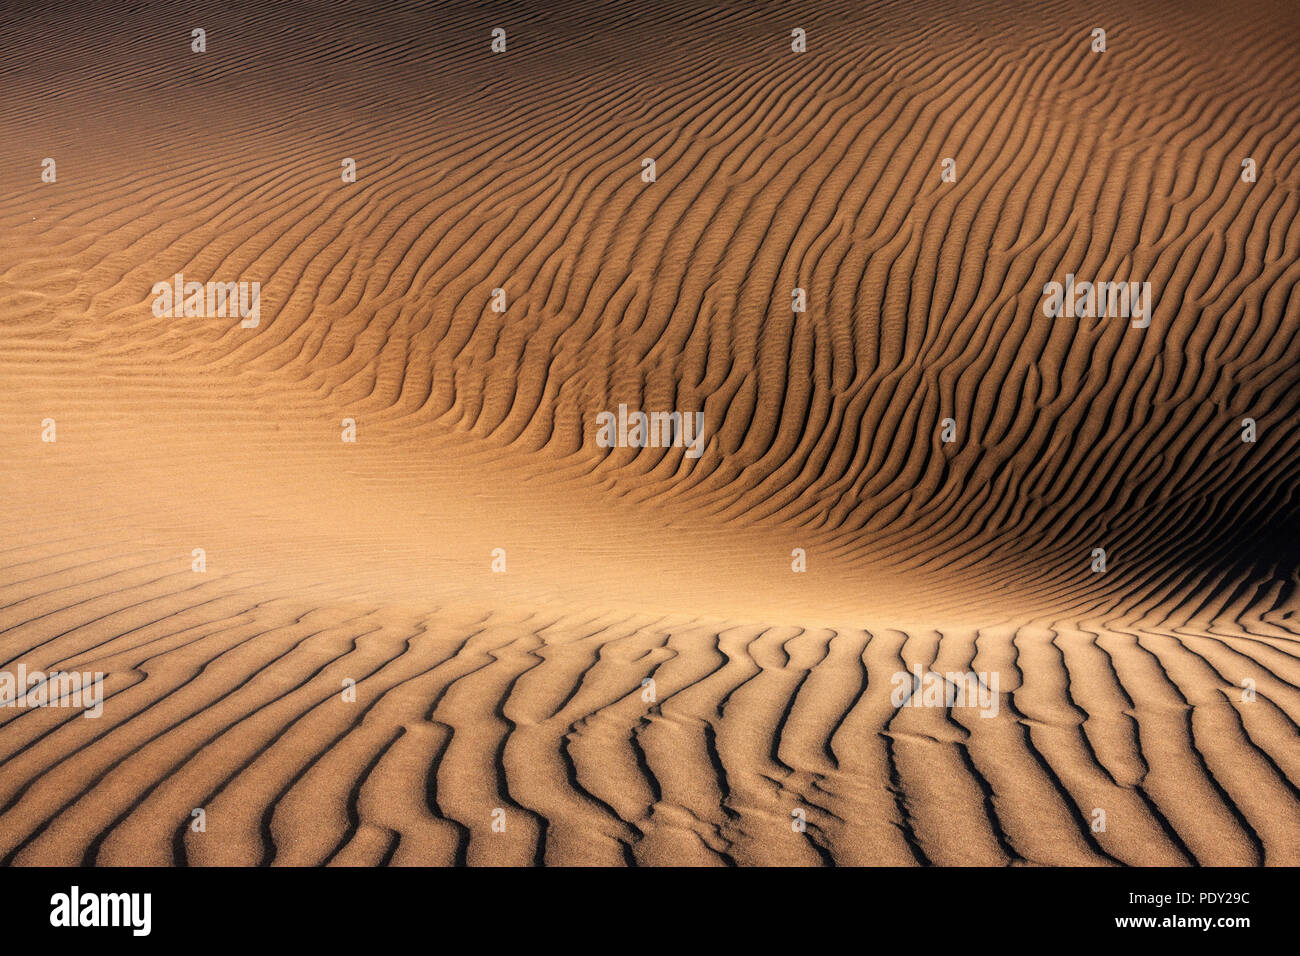 Dunes of Maspalomas, Dunas de Maspalomas, structures in the sand, nature reserve, Gran Canaria, Canary Islands, Spain Stock Photo